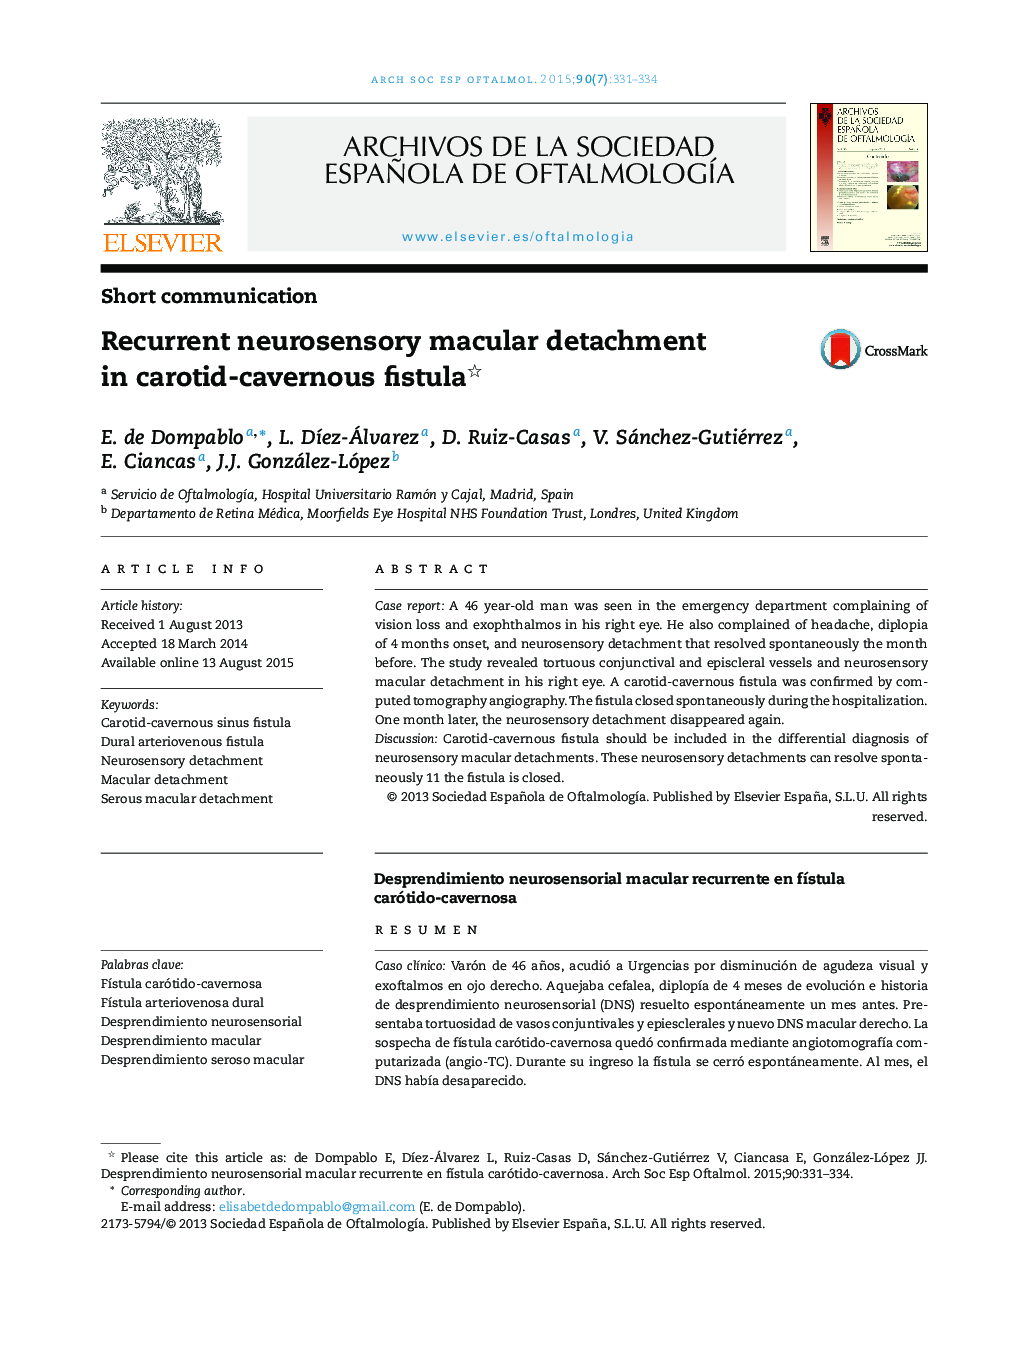 Recurrent neurosensory macular detachment in carotid-cavernous fistula